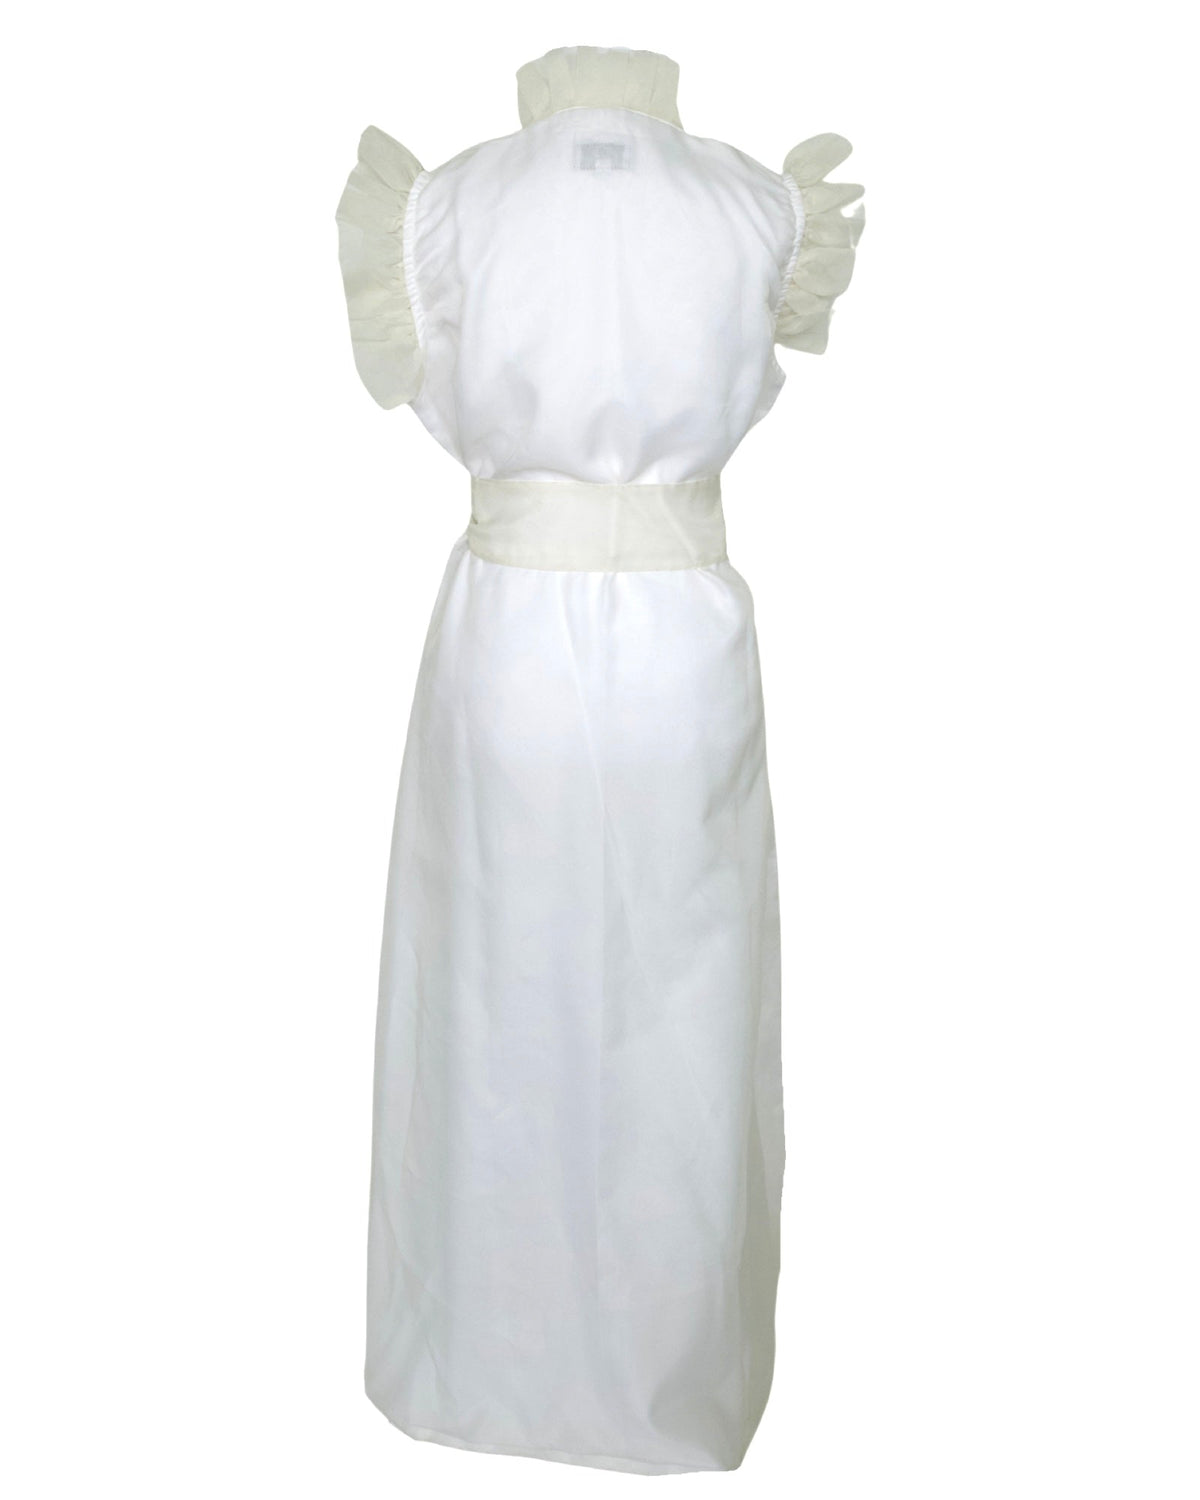 Firenze Dress in Light Ivory Silk Organza